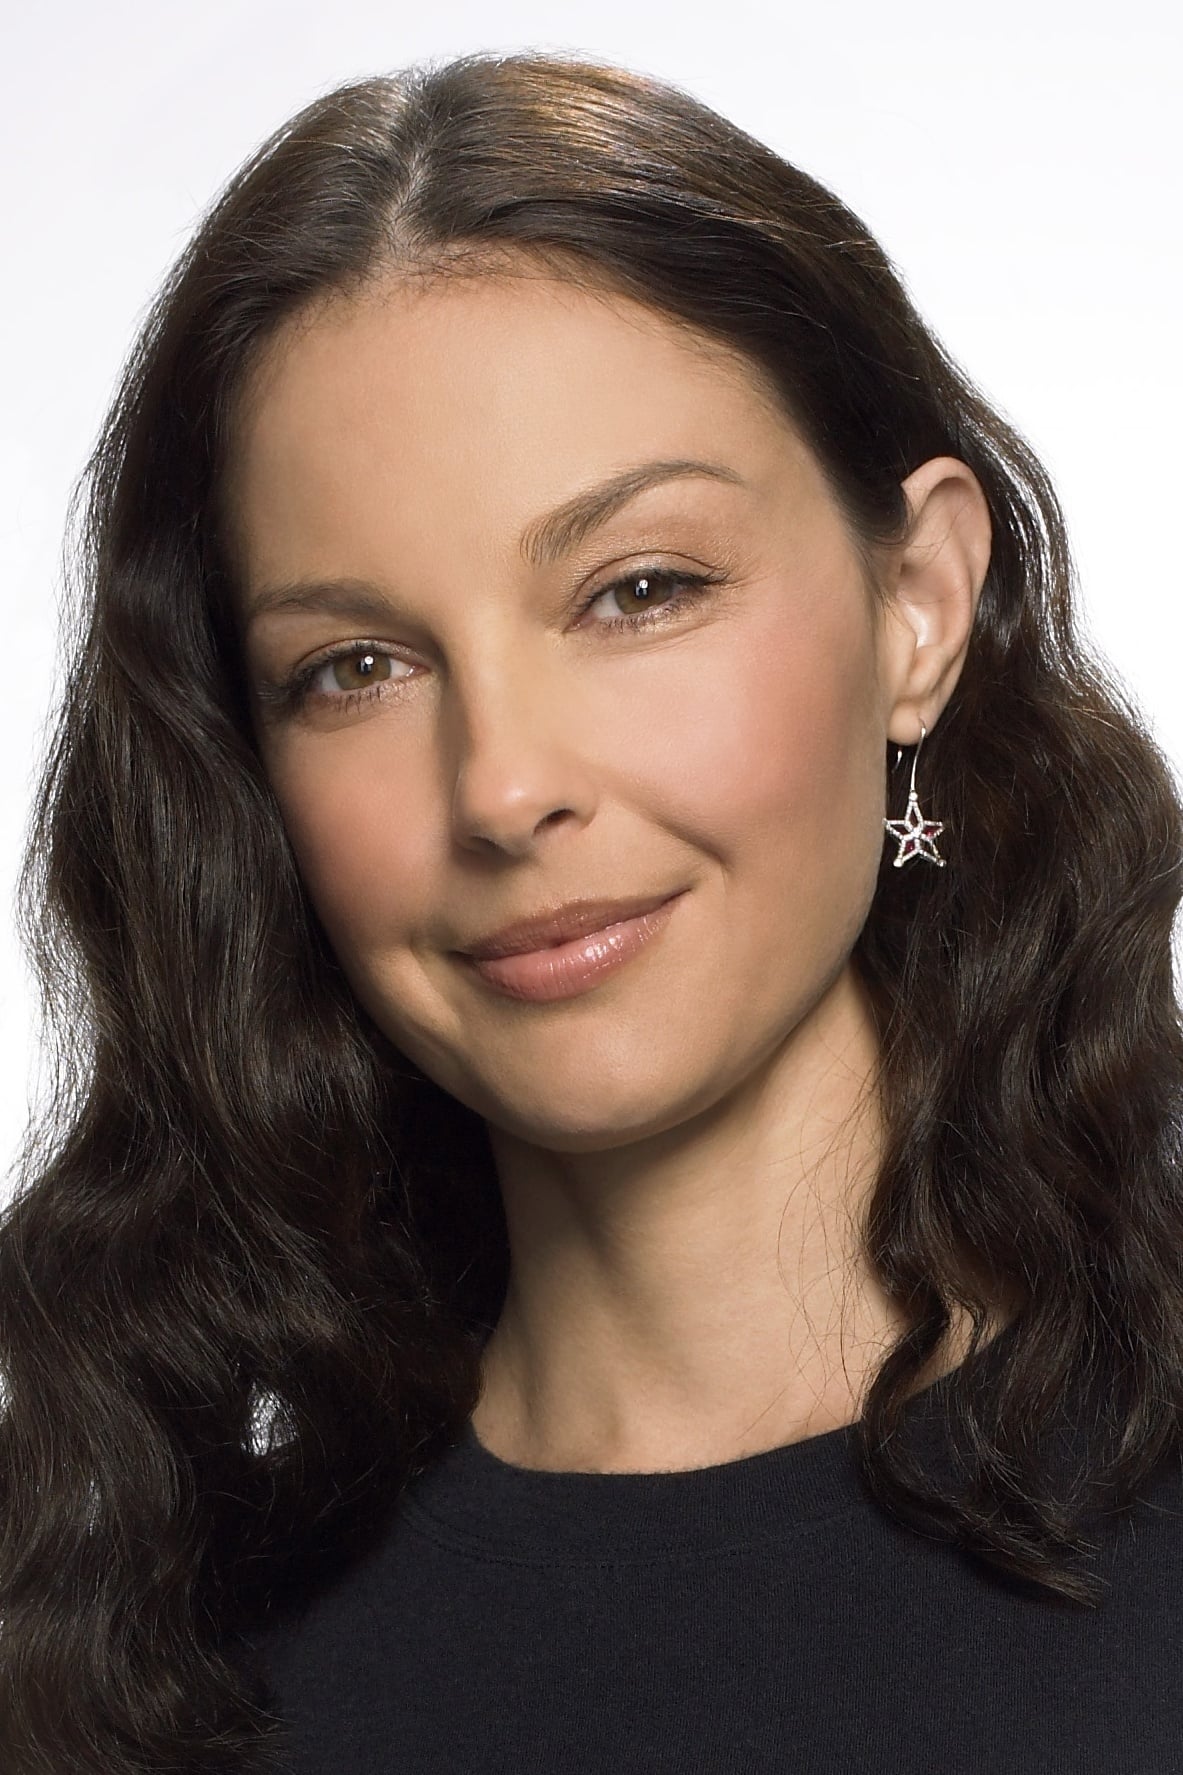 Ashley Judd Image